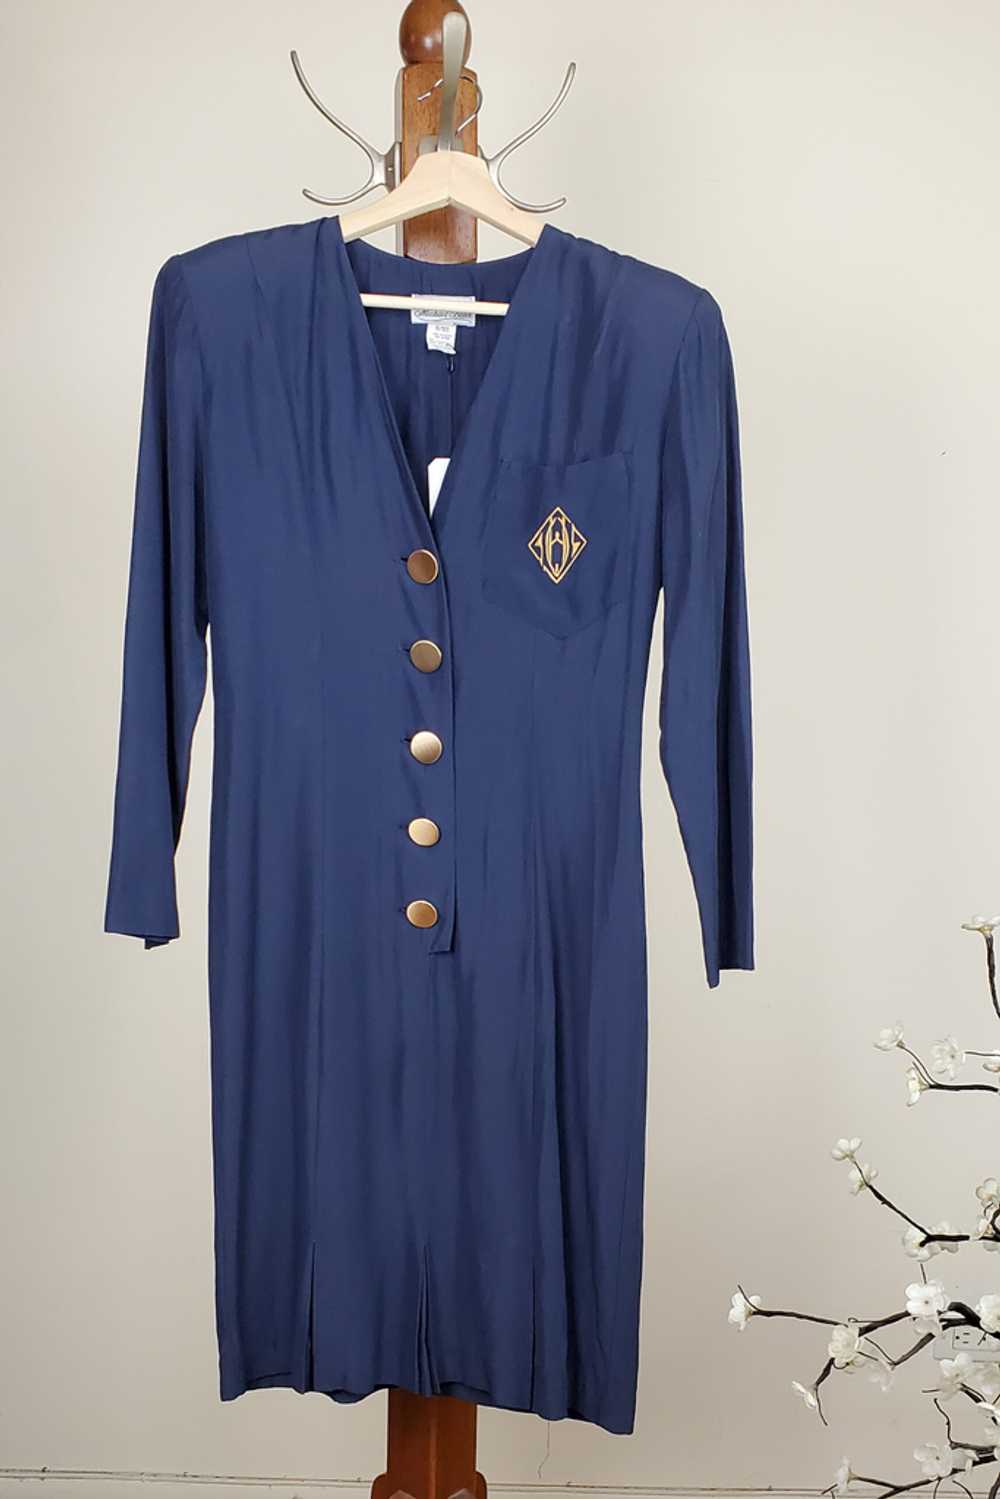 Michael Blair Union Made Vintage Dress - image 1